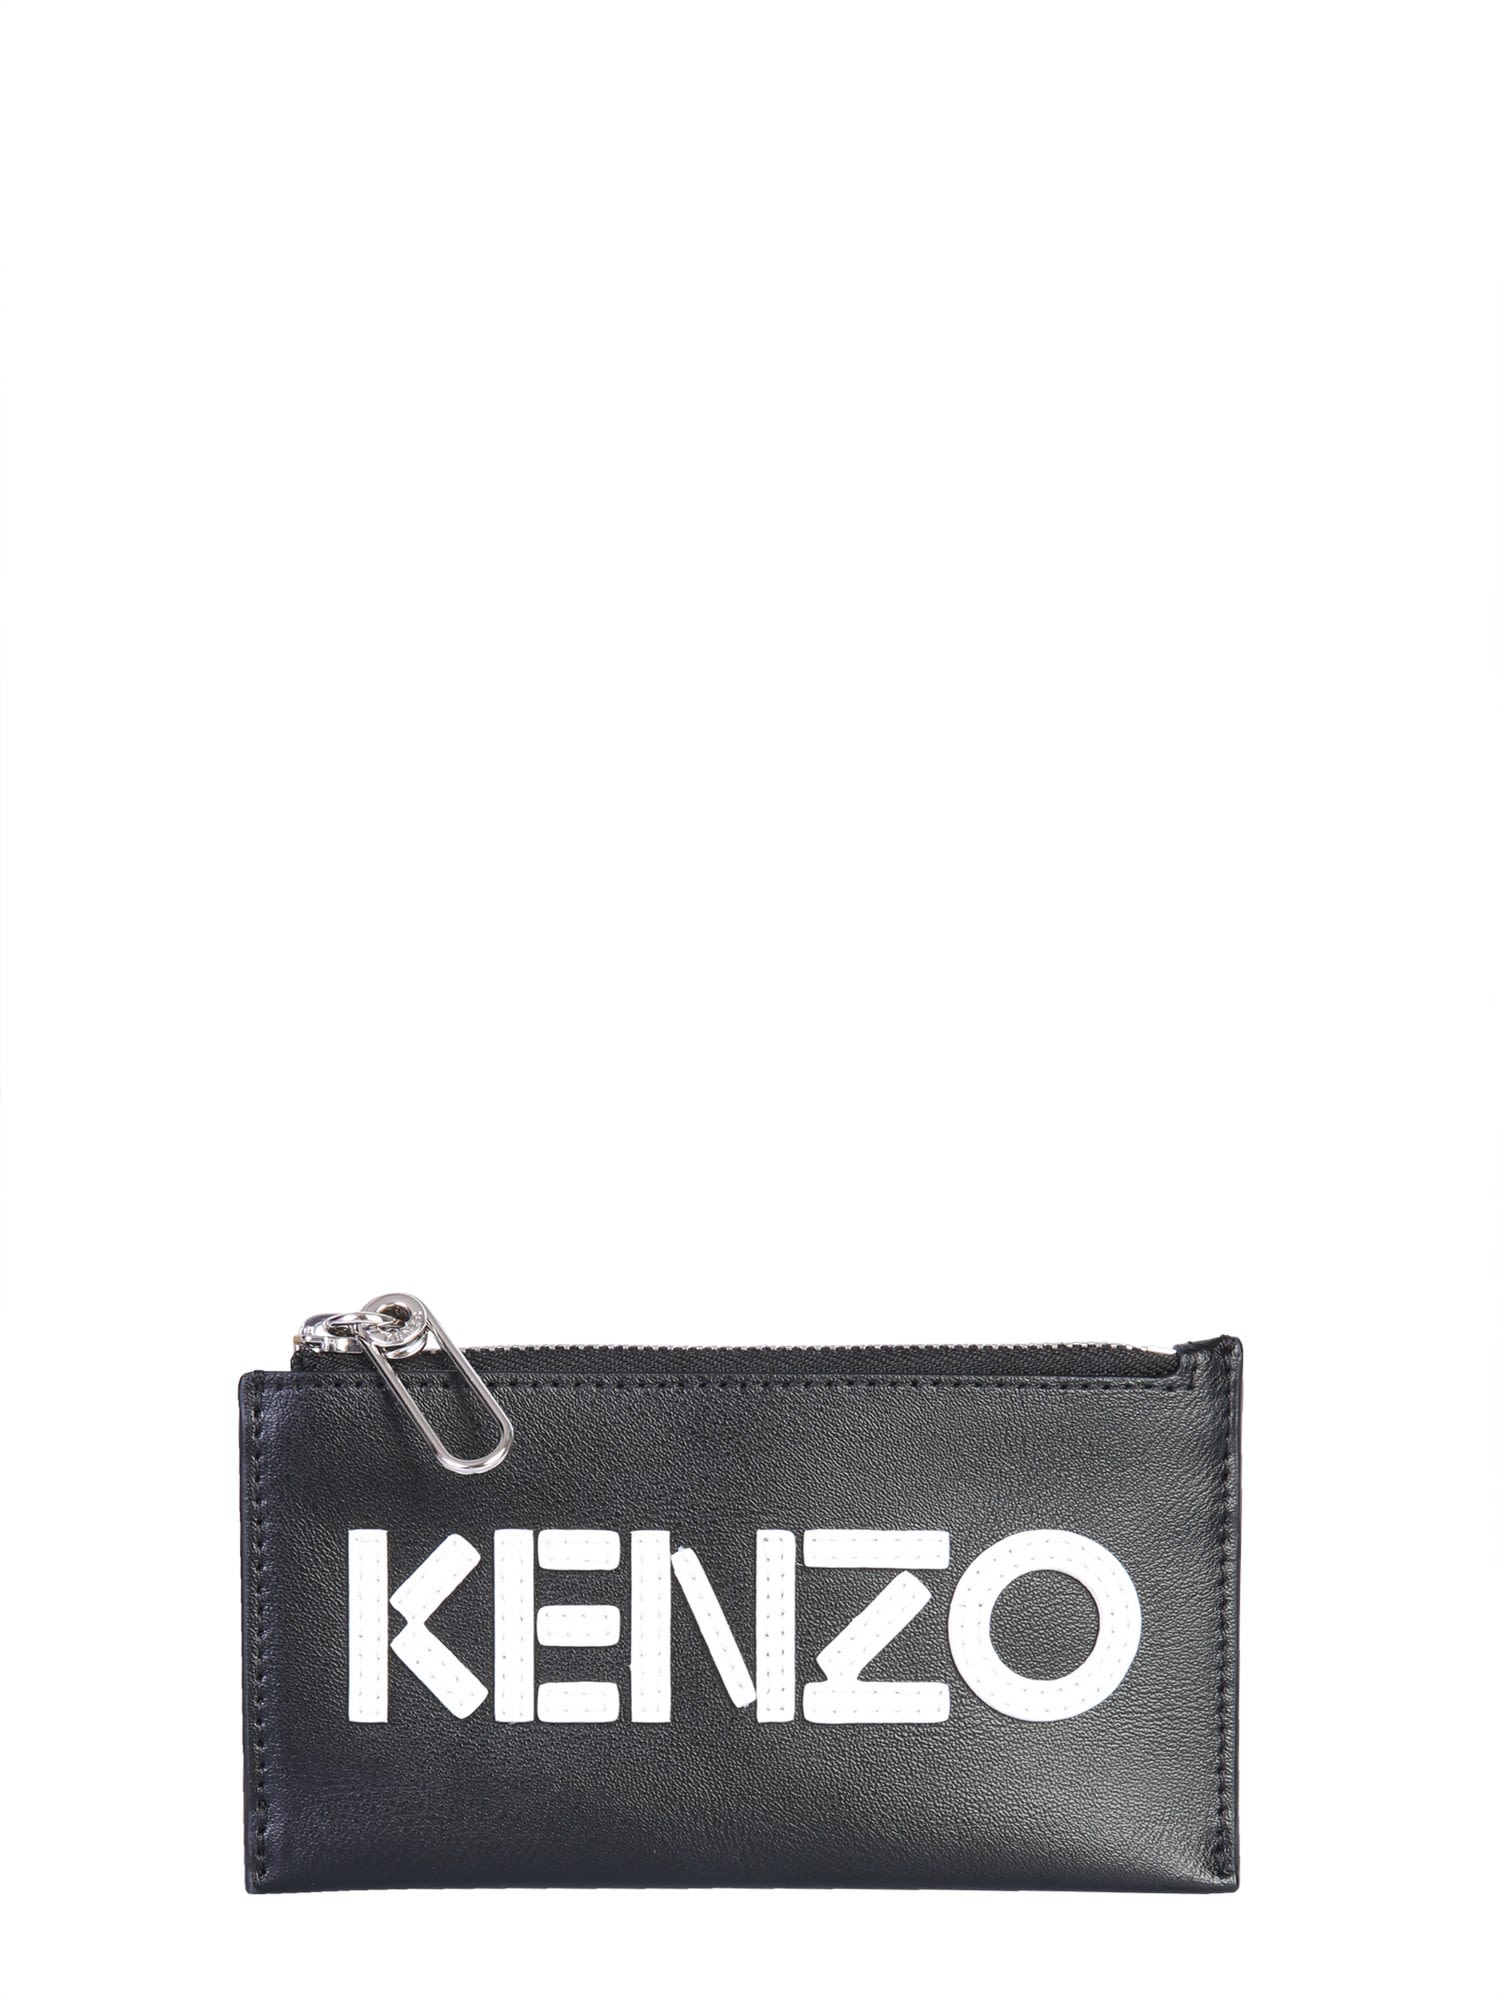 Kenzo Wallet With Logo In Nero | ModeSens